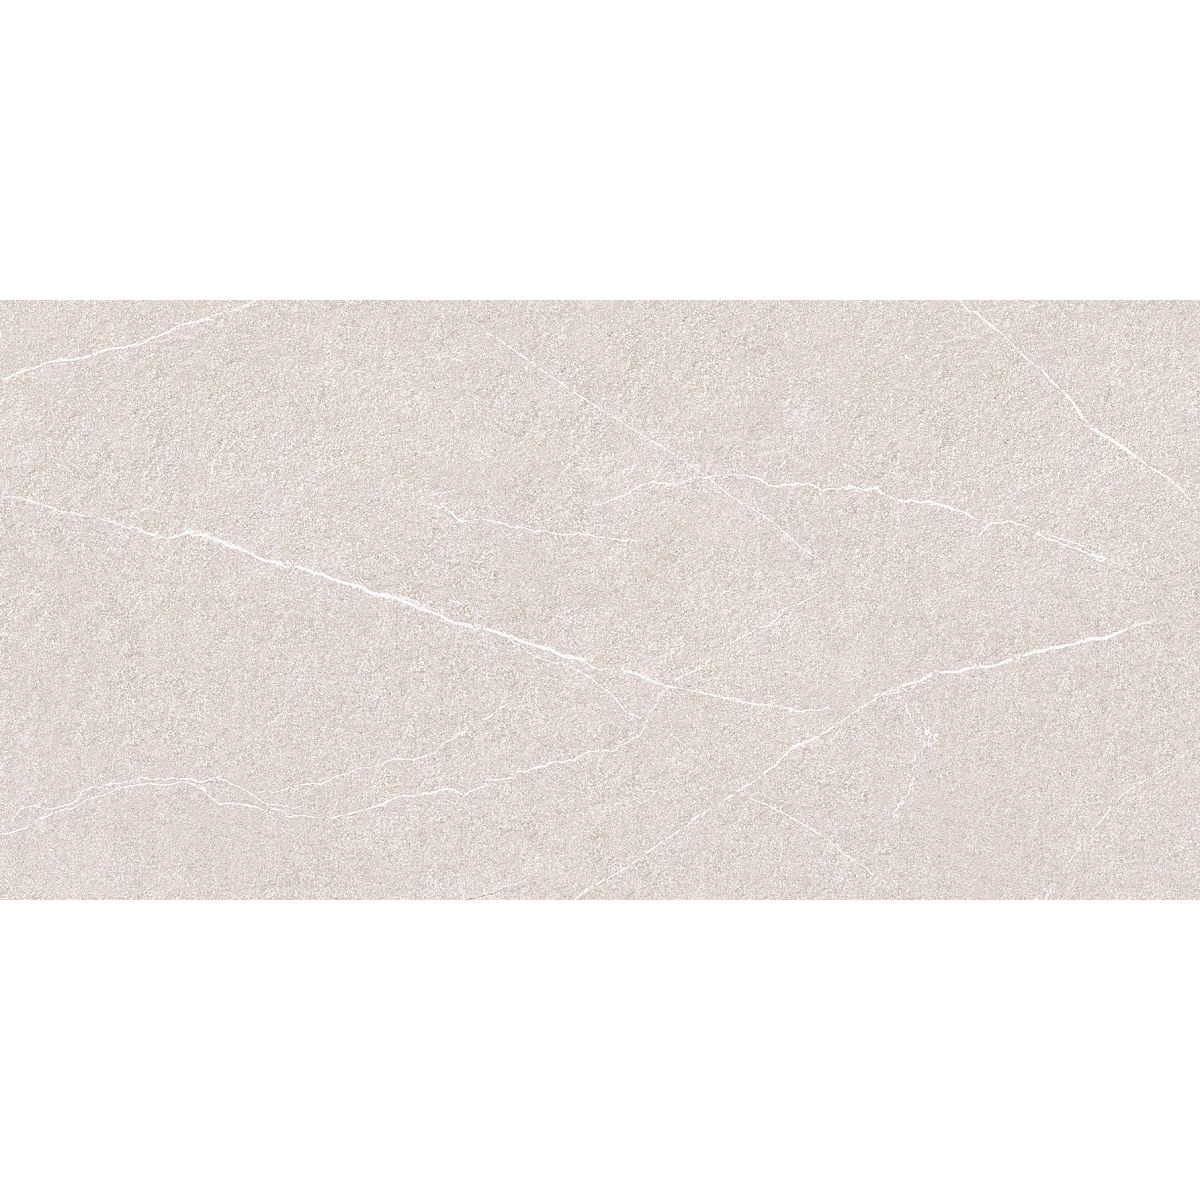 Настенная плитка Керлайф Monte Bianco 31,5x63 см (922715)